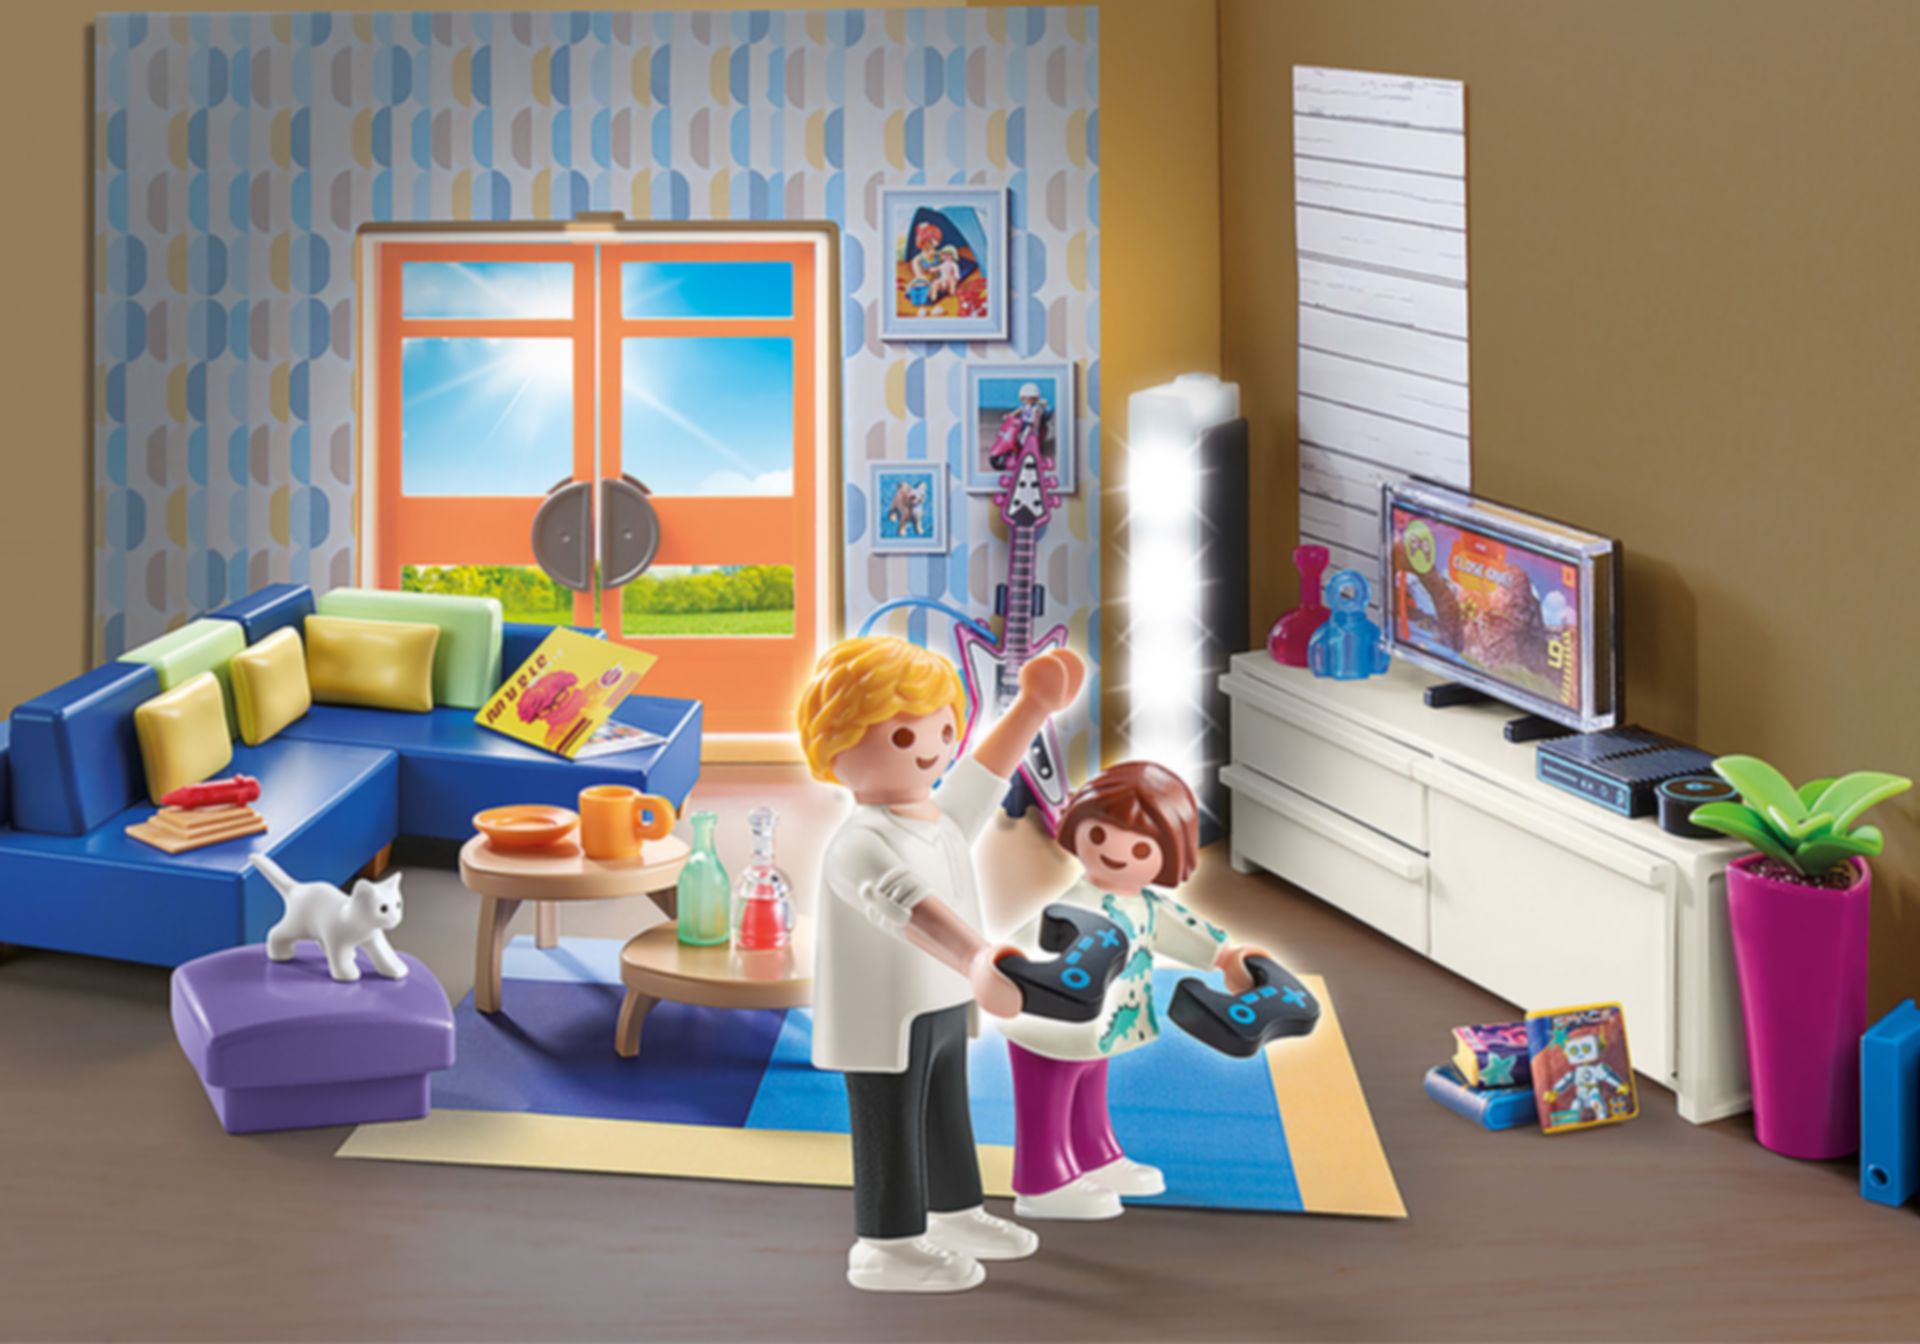 Playmobil® City Life Family Room gameplay